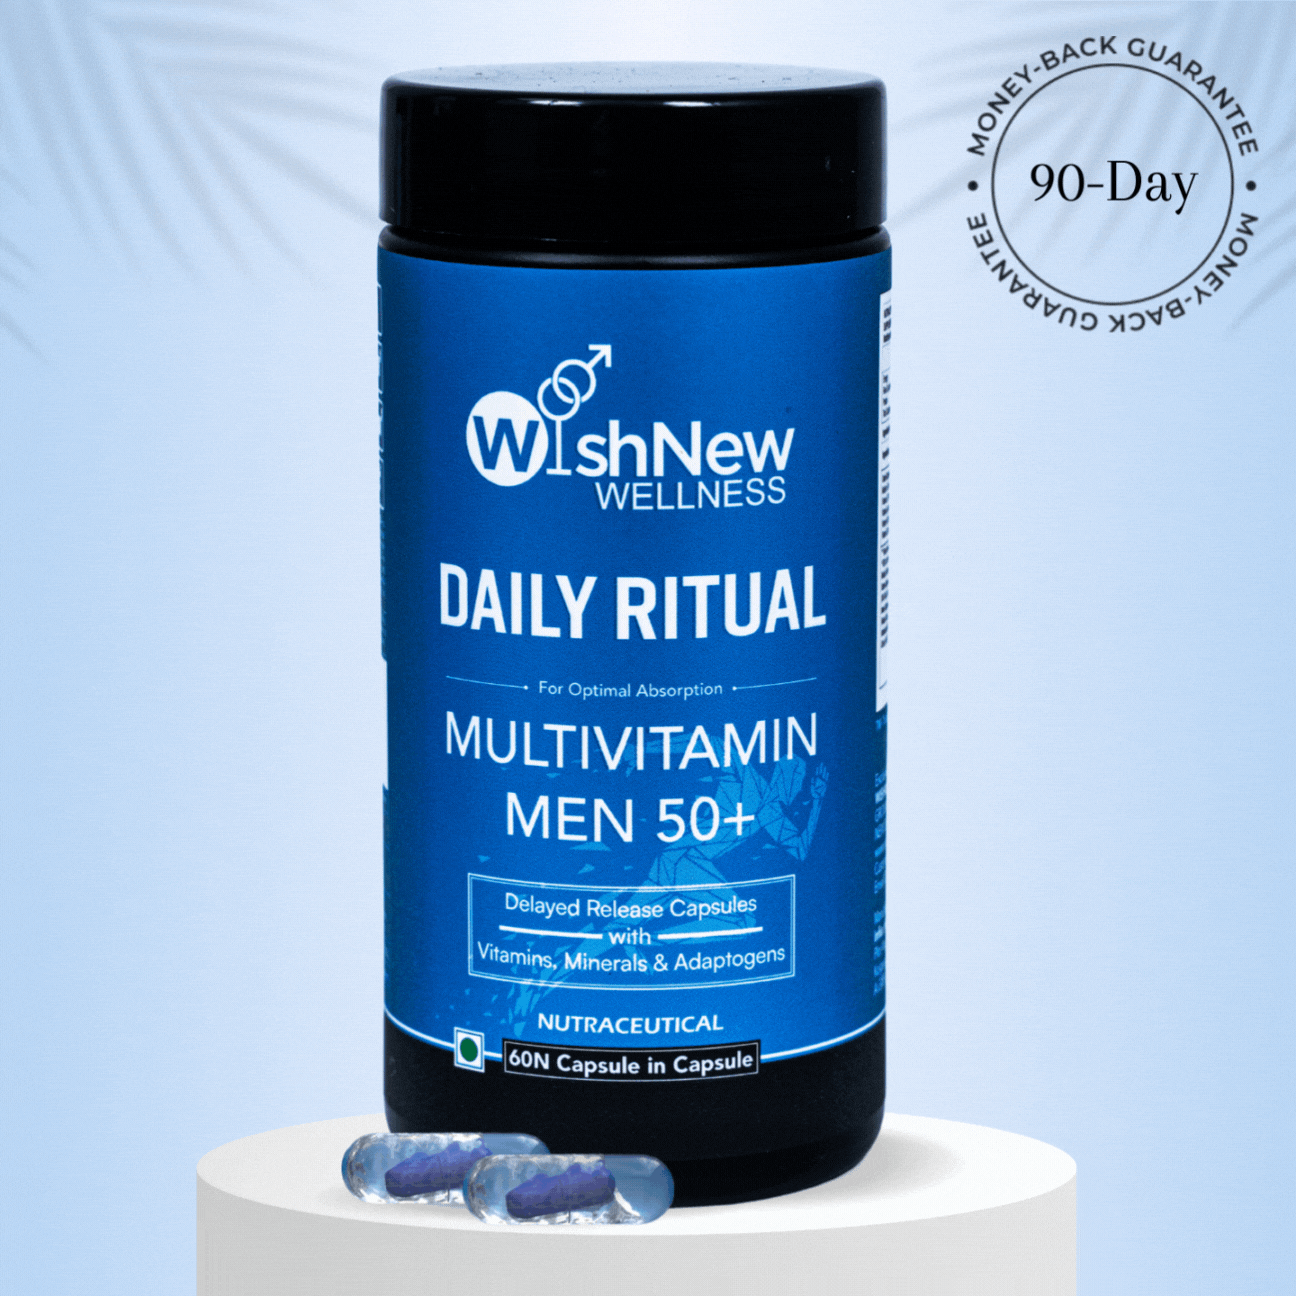 Daily Ritual Multivitamin MEN 50+